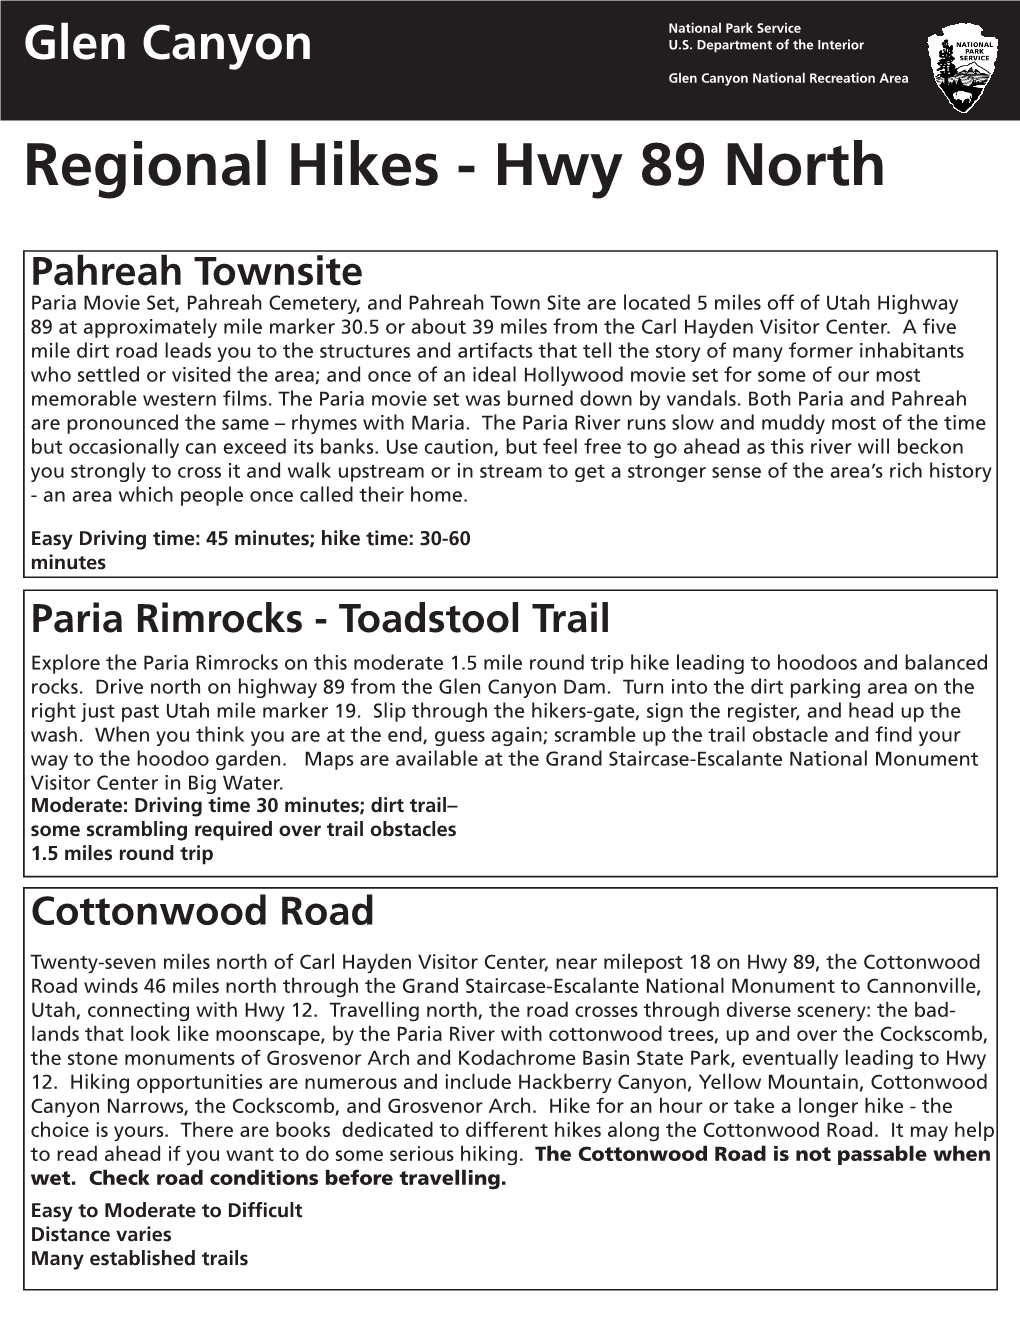 Regional Hikes - Hwy 89 North